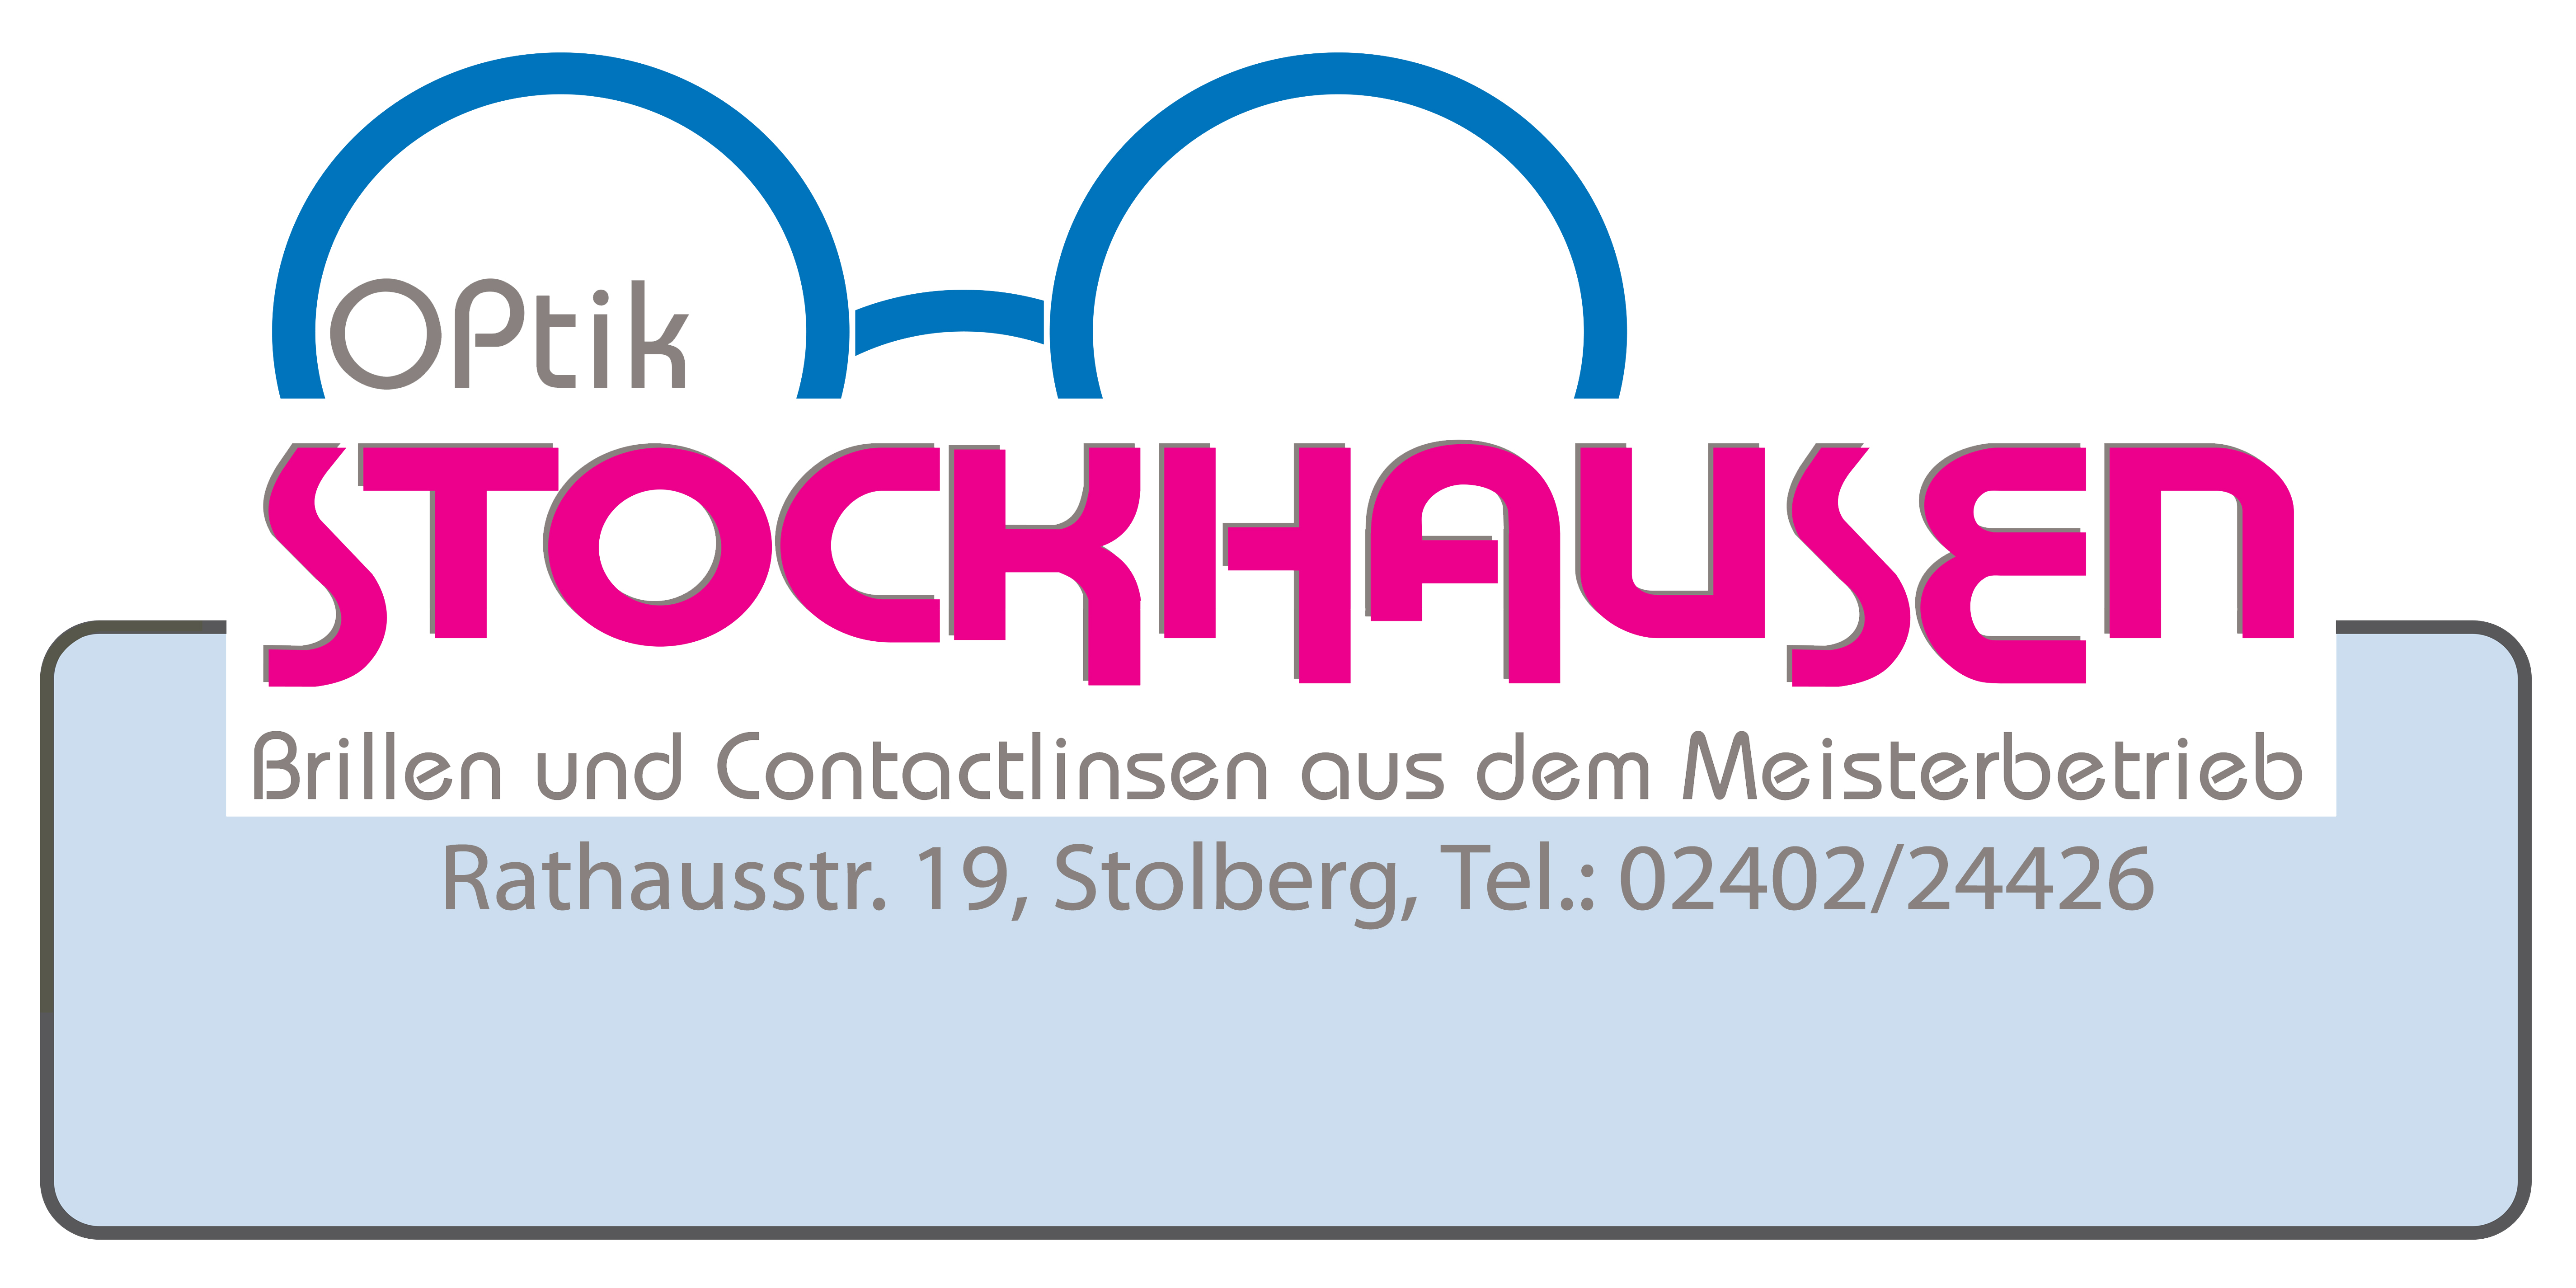 Optik Stockhausen GmbH